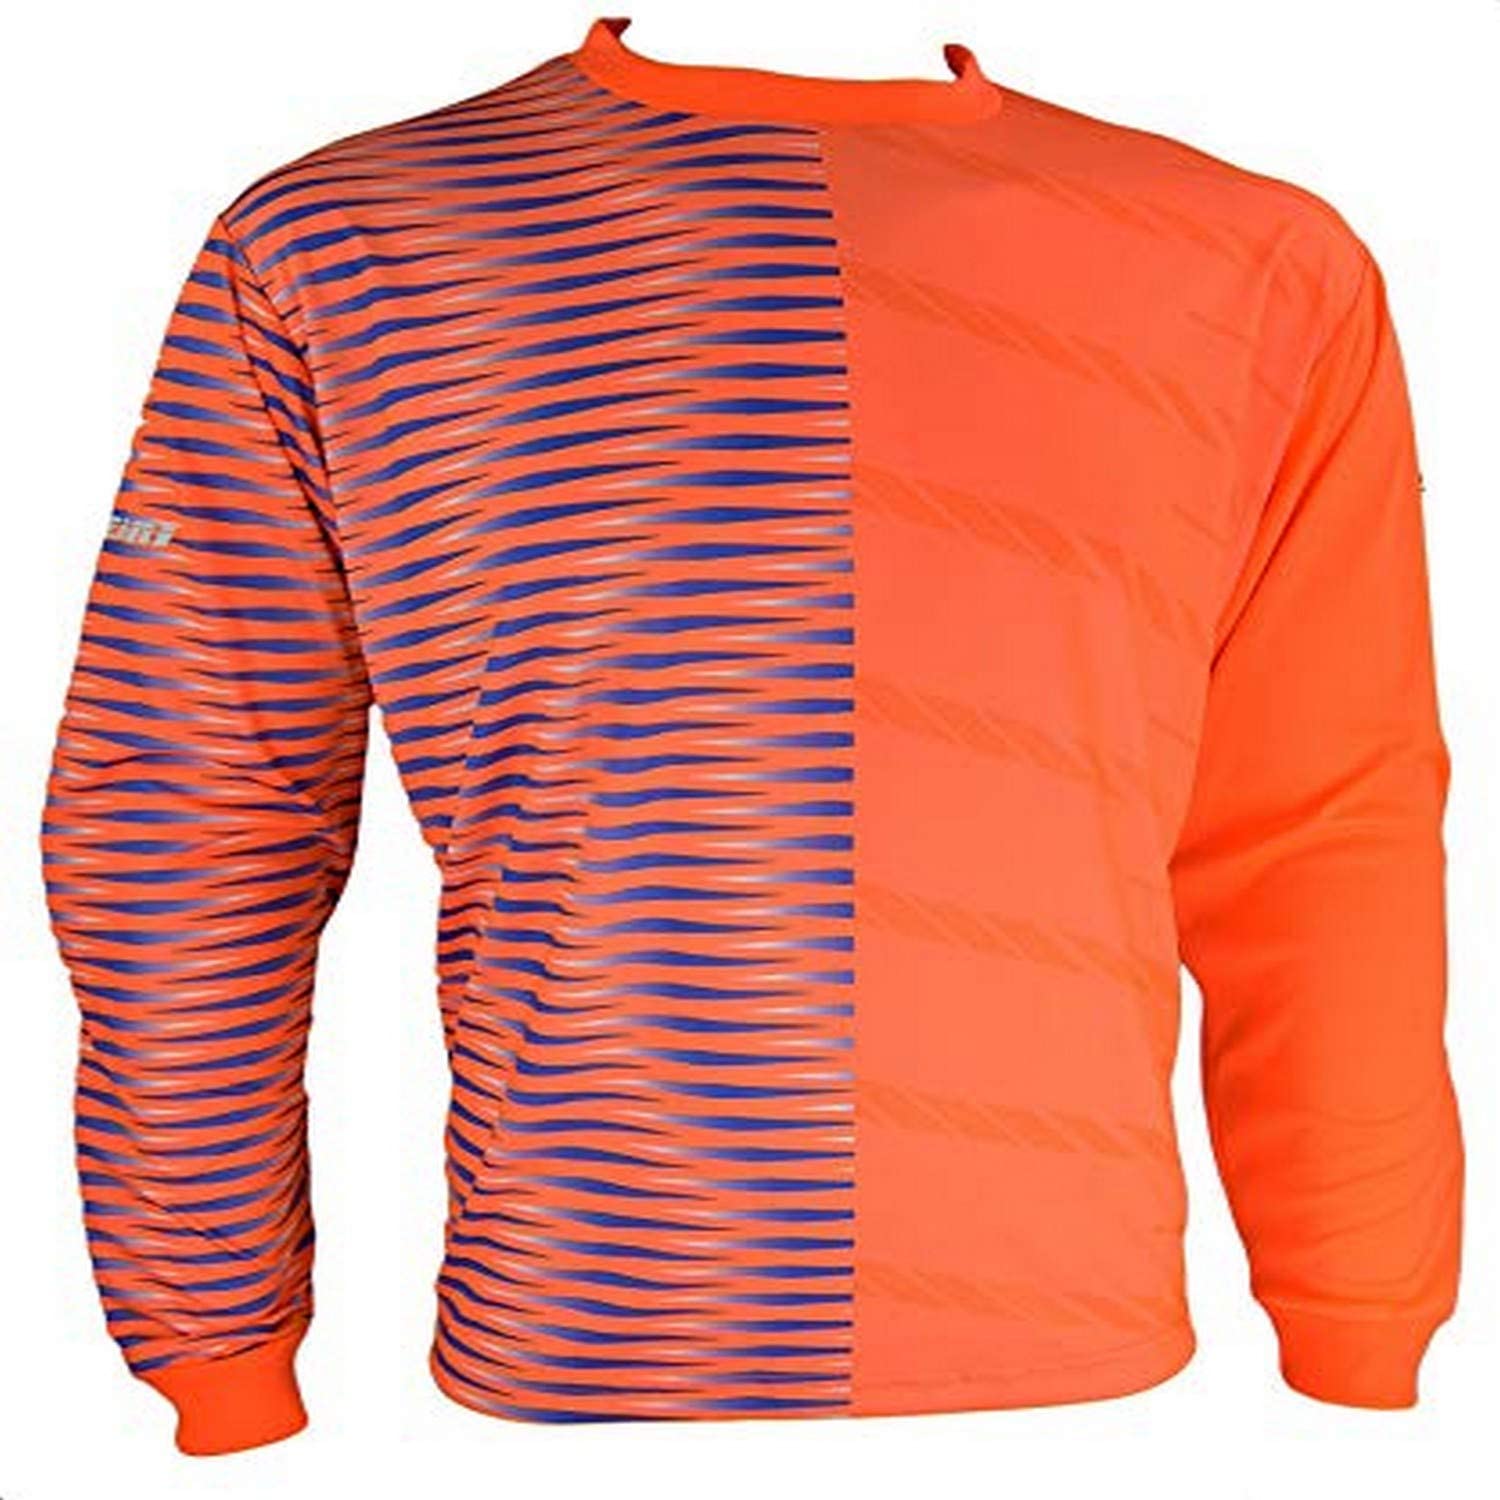 Portola Goalkeeper Jersey - Orange/Royal/Silver